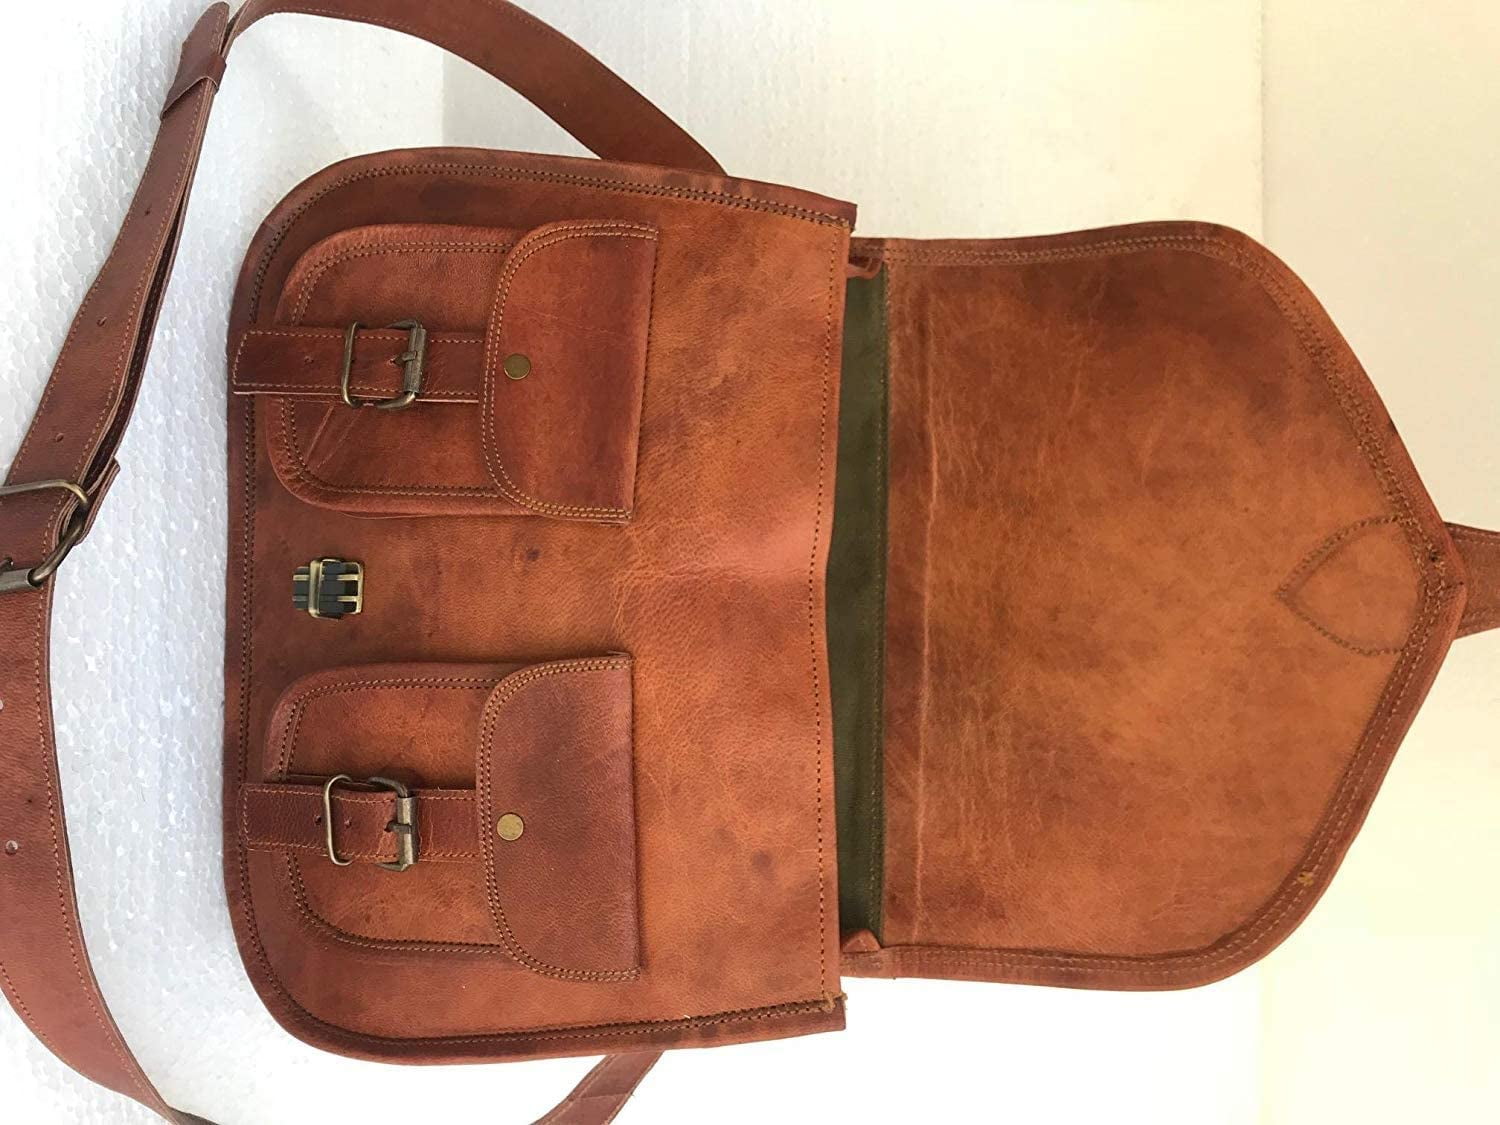 HAUTTON Women's Premium Geniune Leather Large Handbag | Hand Held Bag |  Hand-held Bag | Ladies Leather Purse with Zipper Closure Colour: Tan Brown  at Rs 7499.00 | Women Leather Handbags, महिलाओं